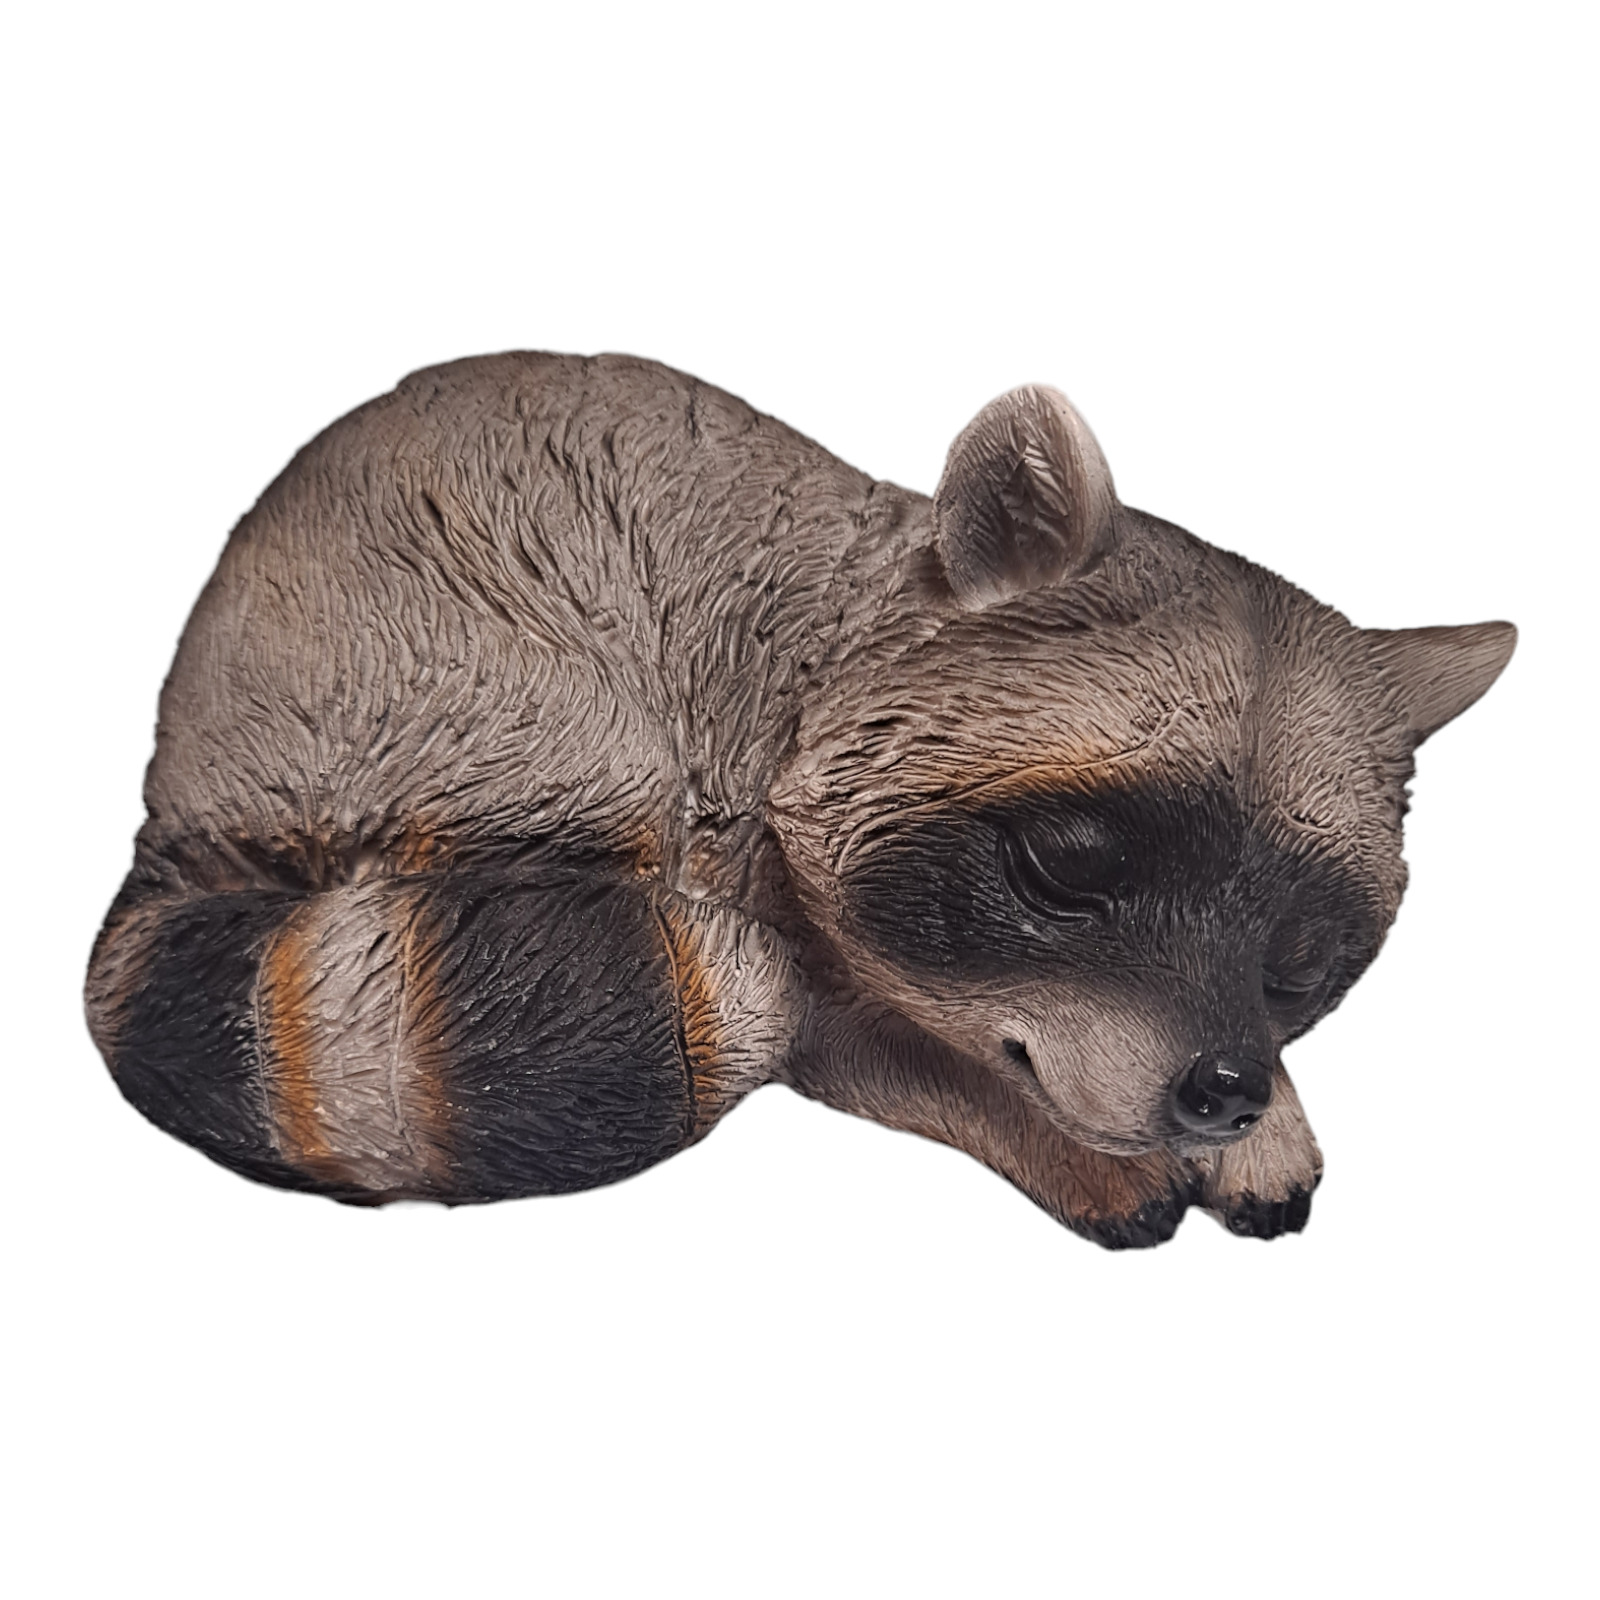 Raccoon Figurine Sleeping Woodland Racoon Figurine Animal Wildlife Nature